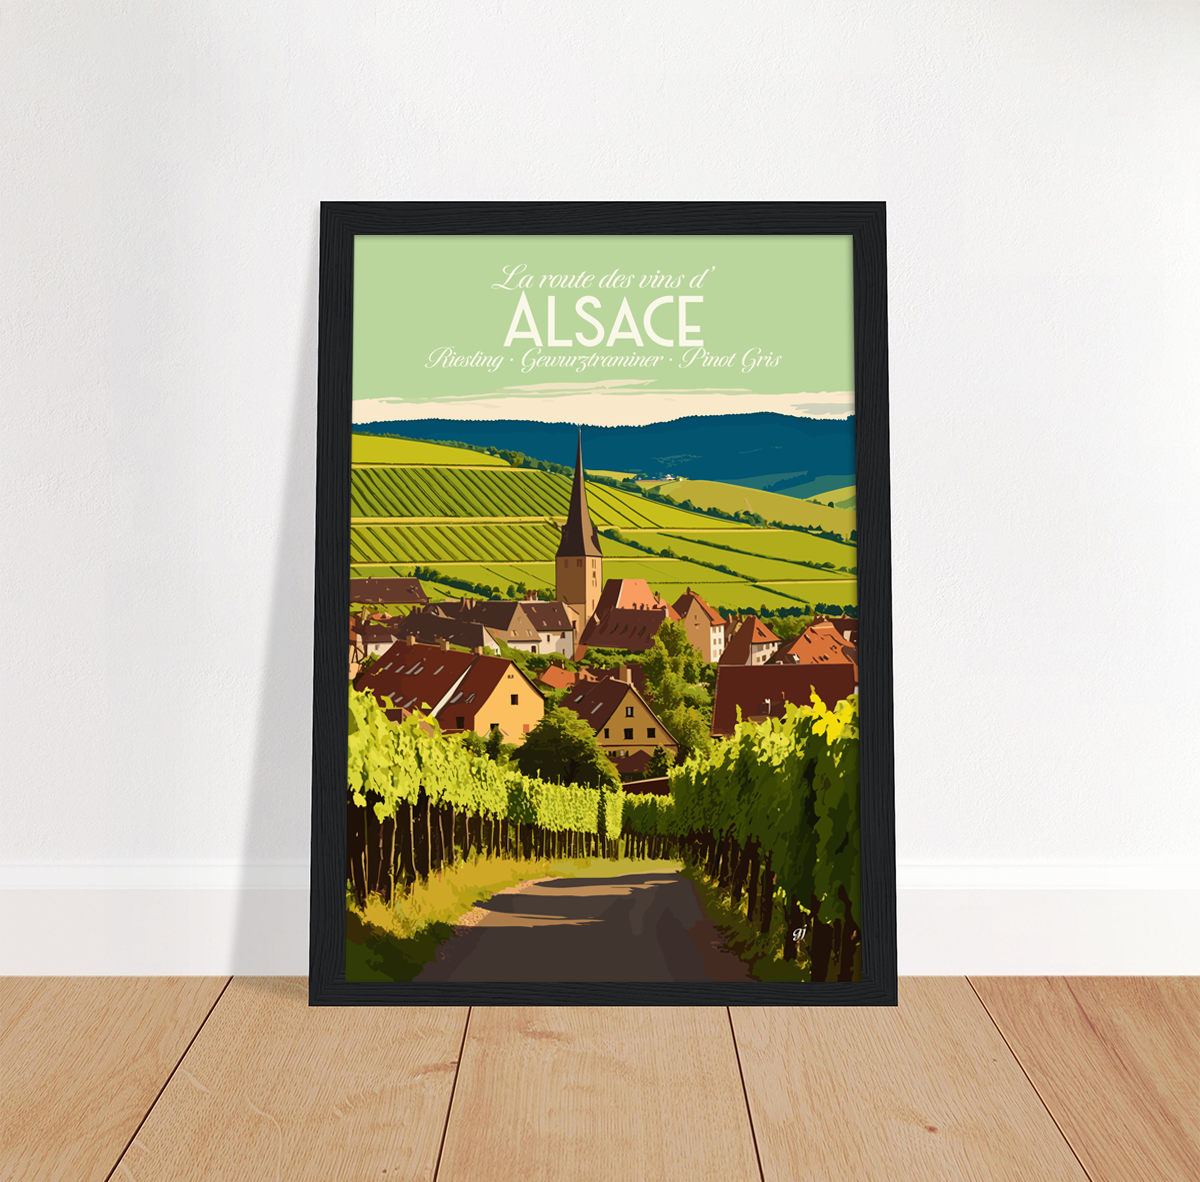 Alsace poster by bon voyage design